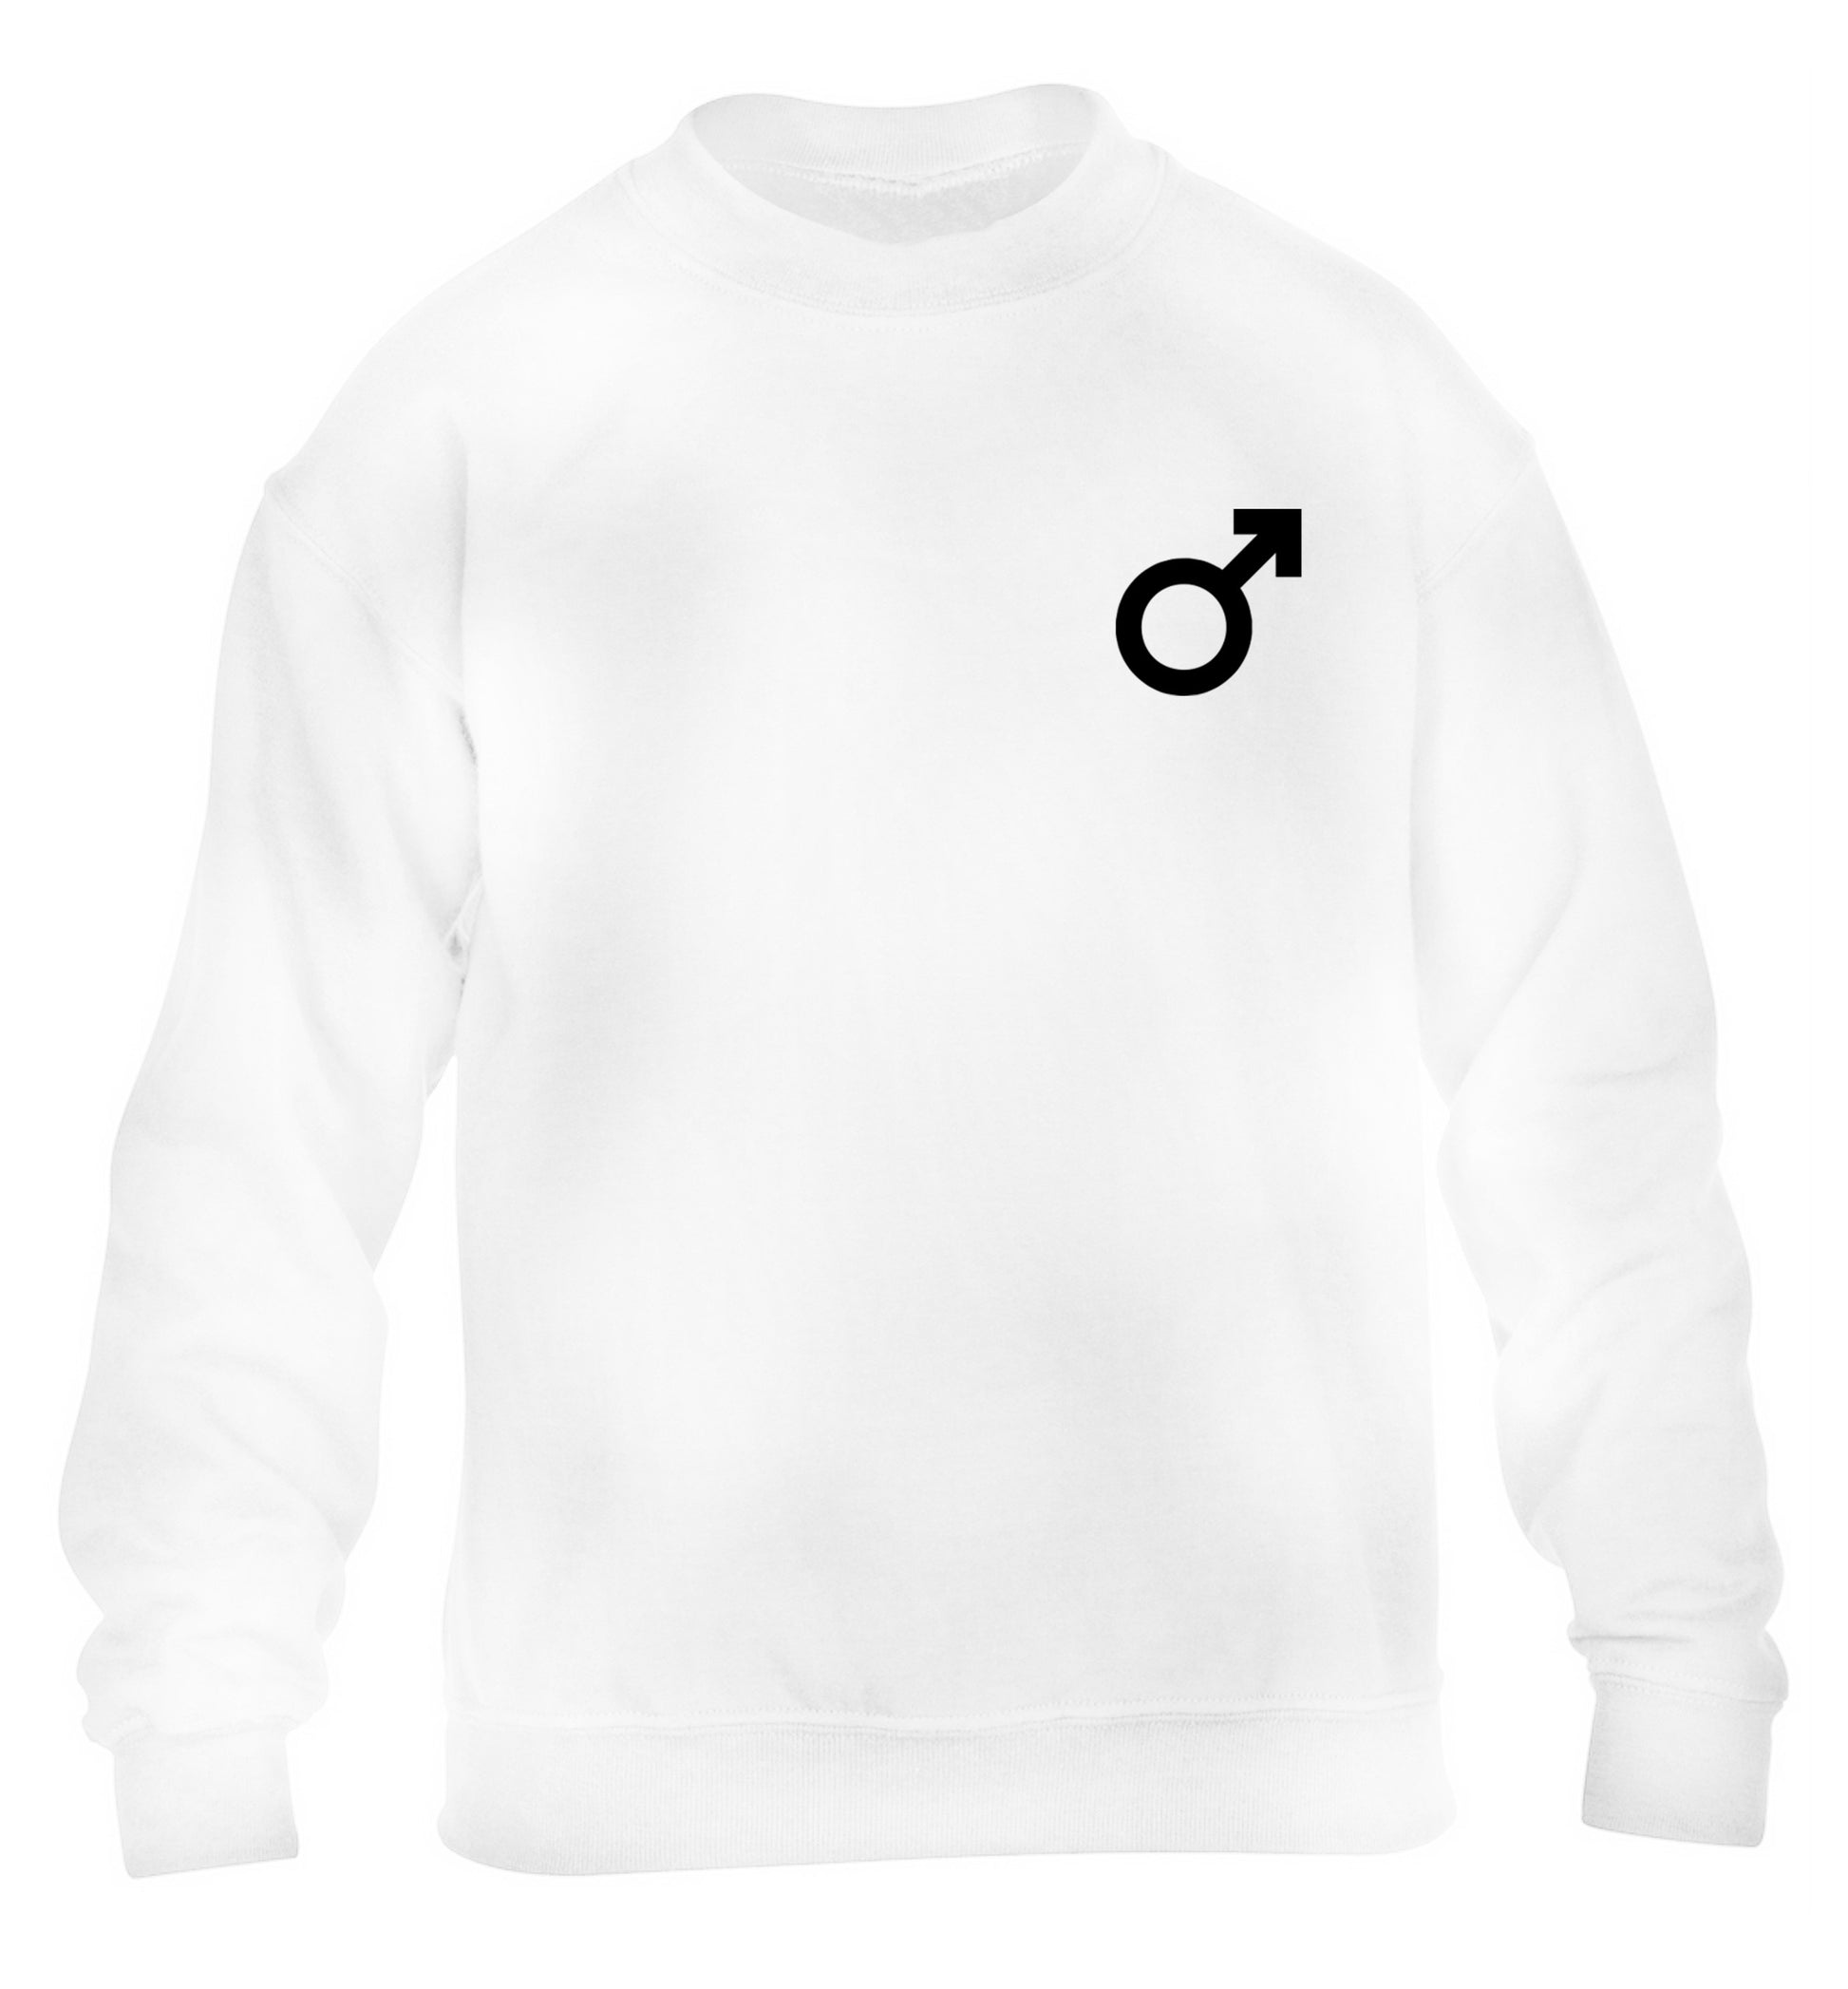 Male symbol pocket children's white sweater 12-14 Years